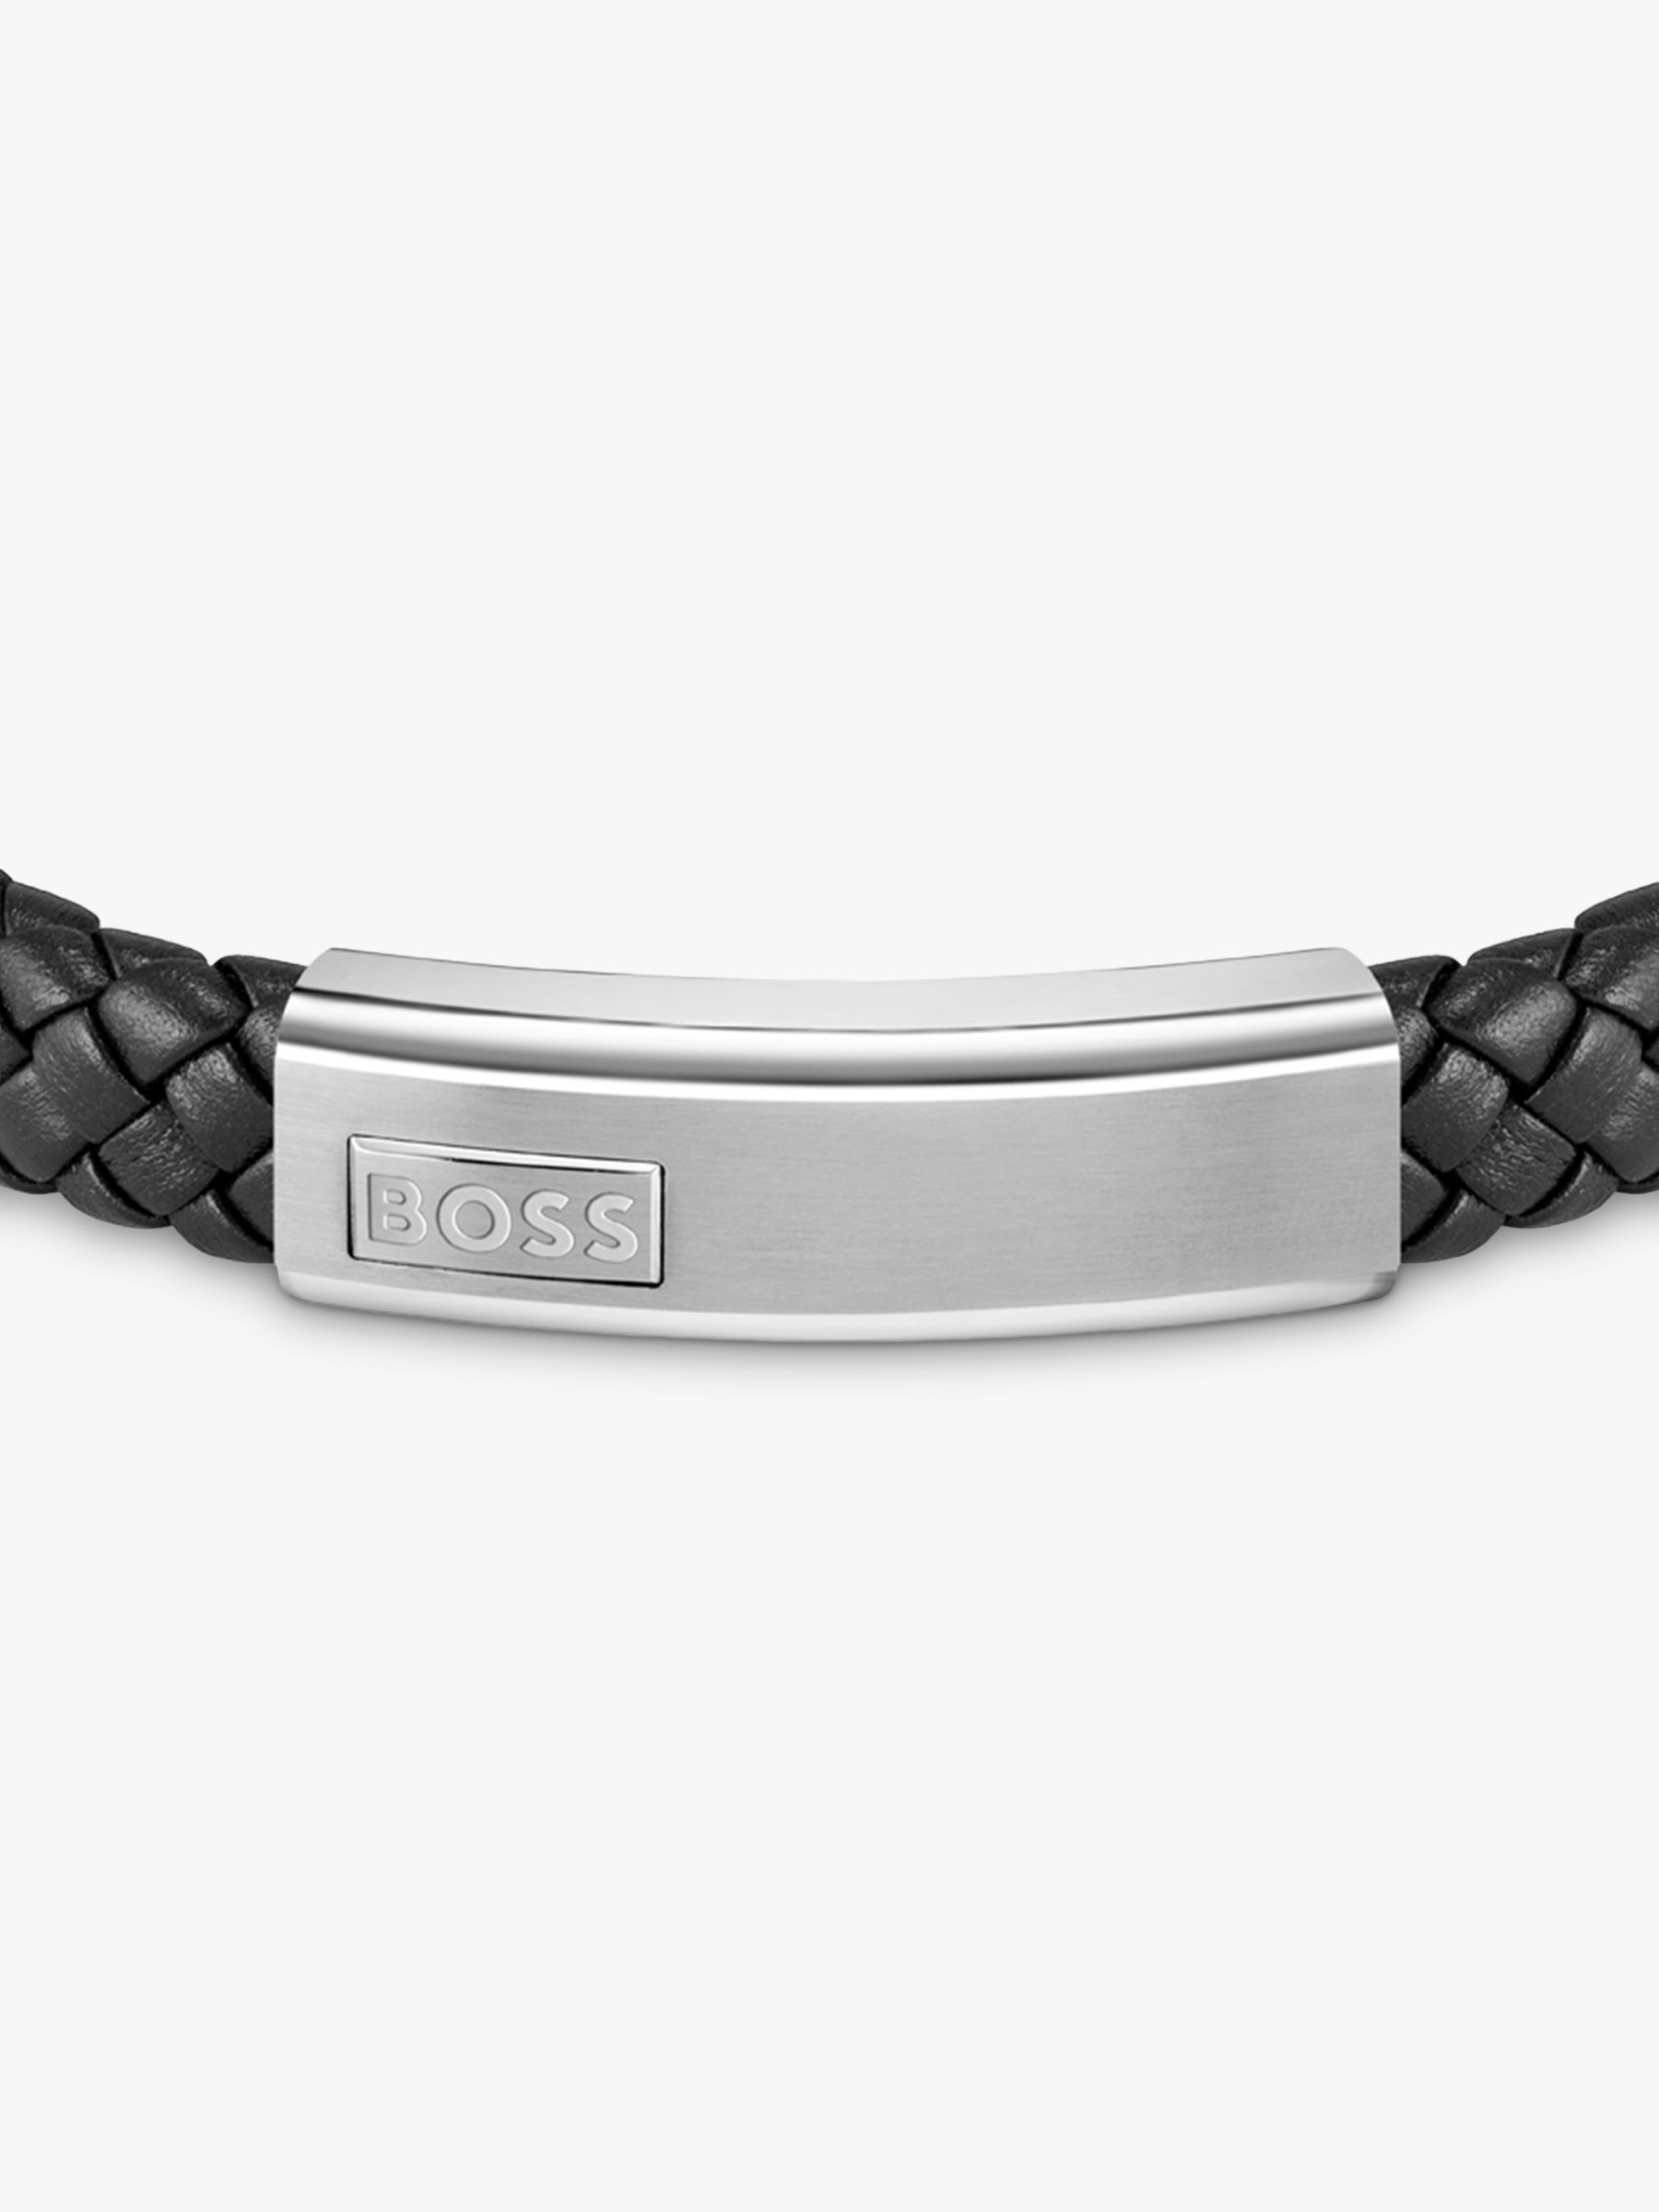 BOSS Men's Woven Leather Logo Bracelet, Black/Silver